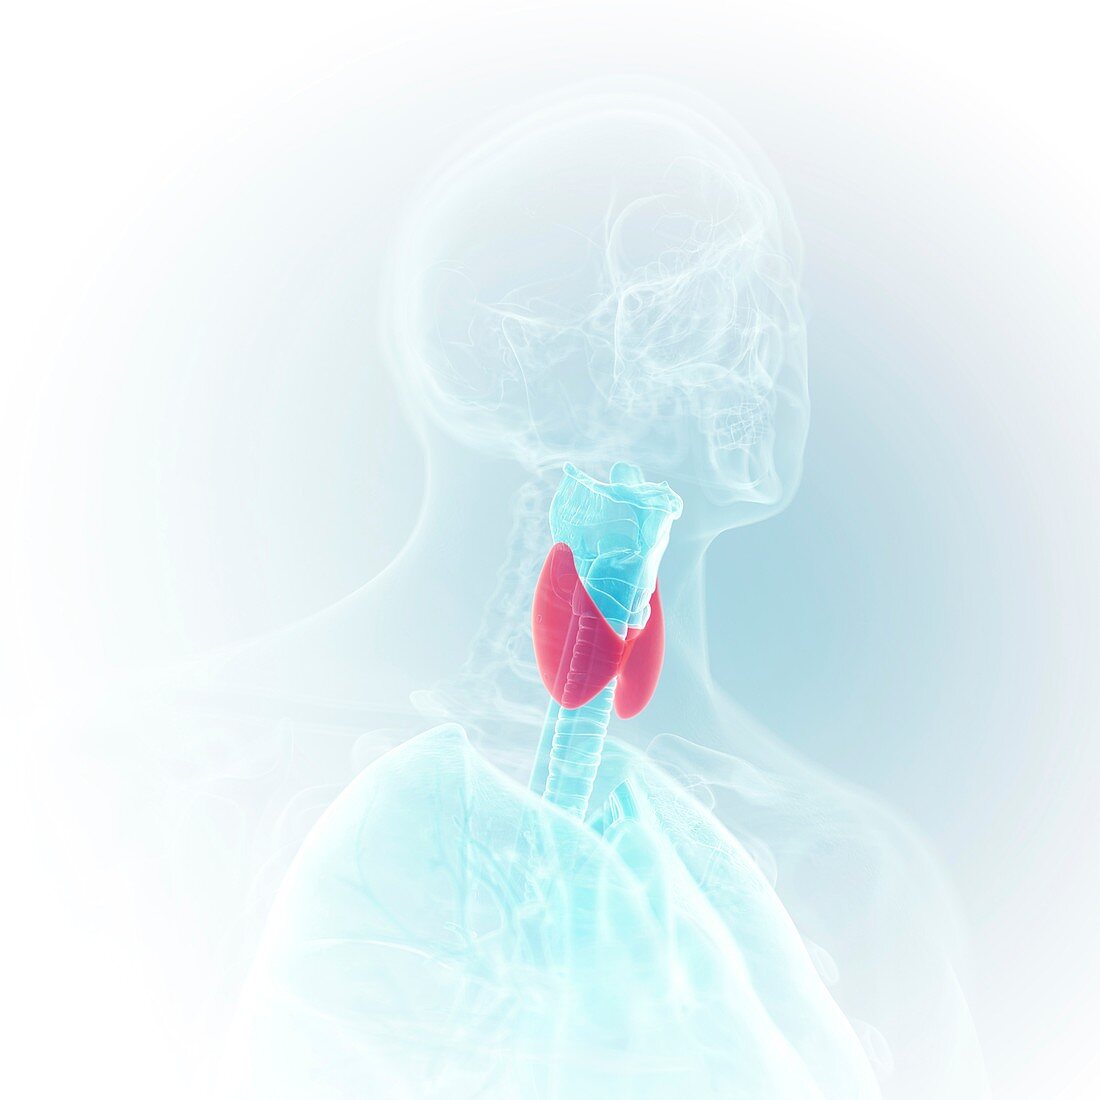 Illustration of the larynx